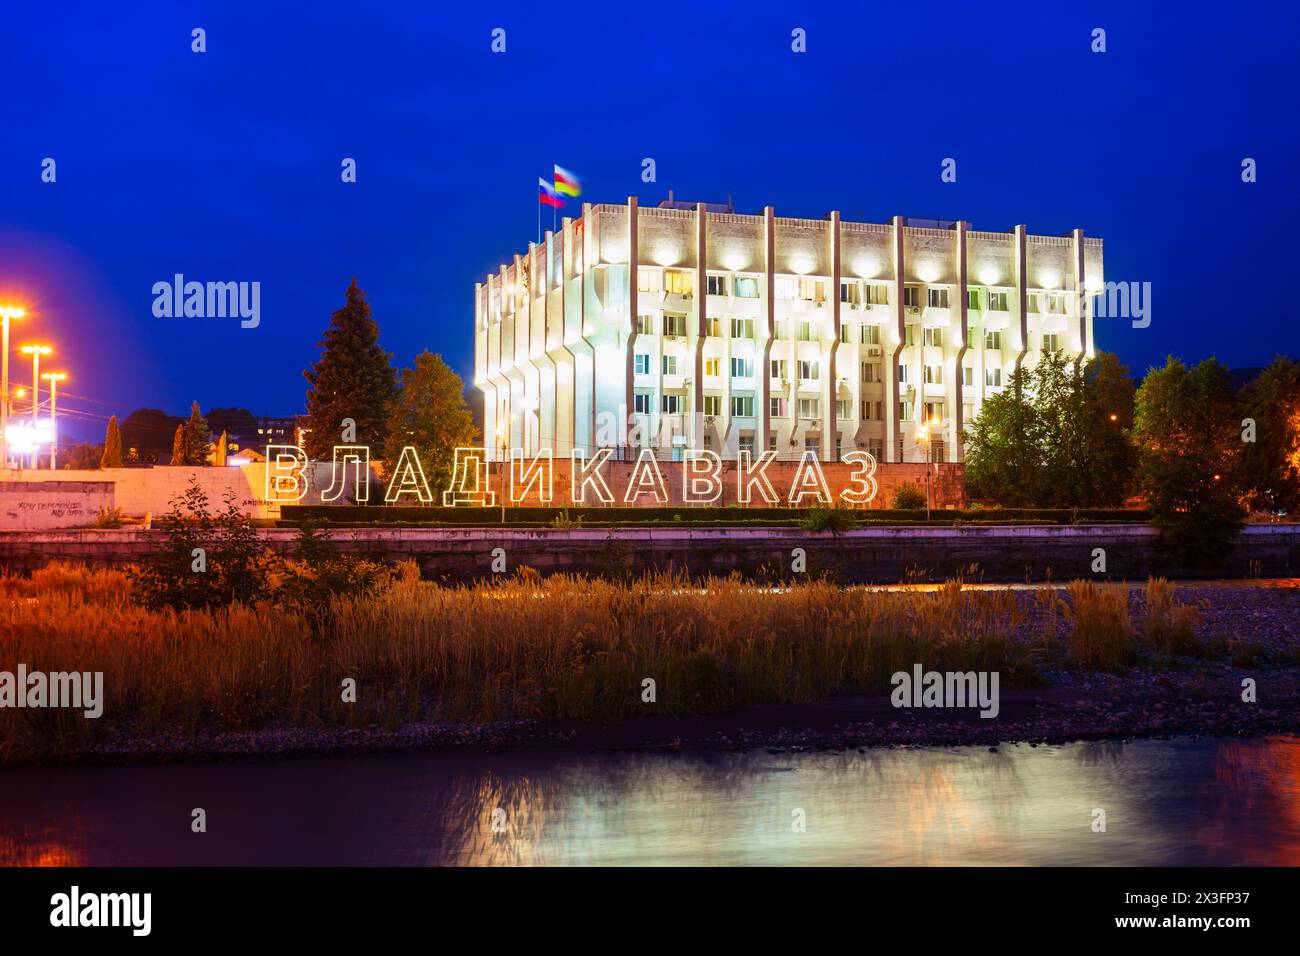 Vladikavkaz, Russia - September 25, 2020: City administration building at the Terek river embankment in Vladikavkaz city, North Ossetia Alania, Russia Stock Photo